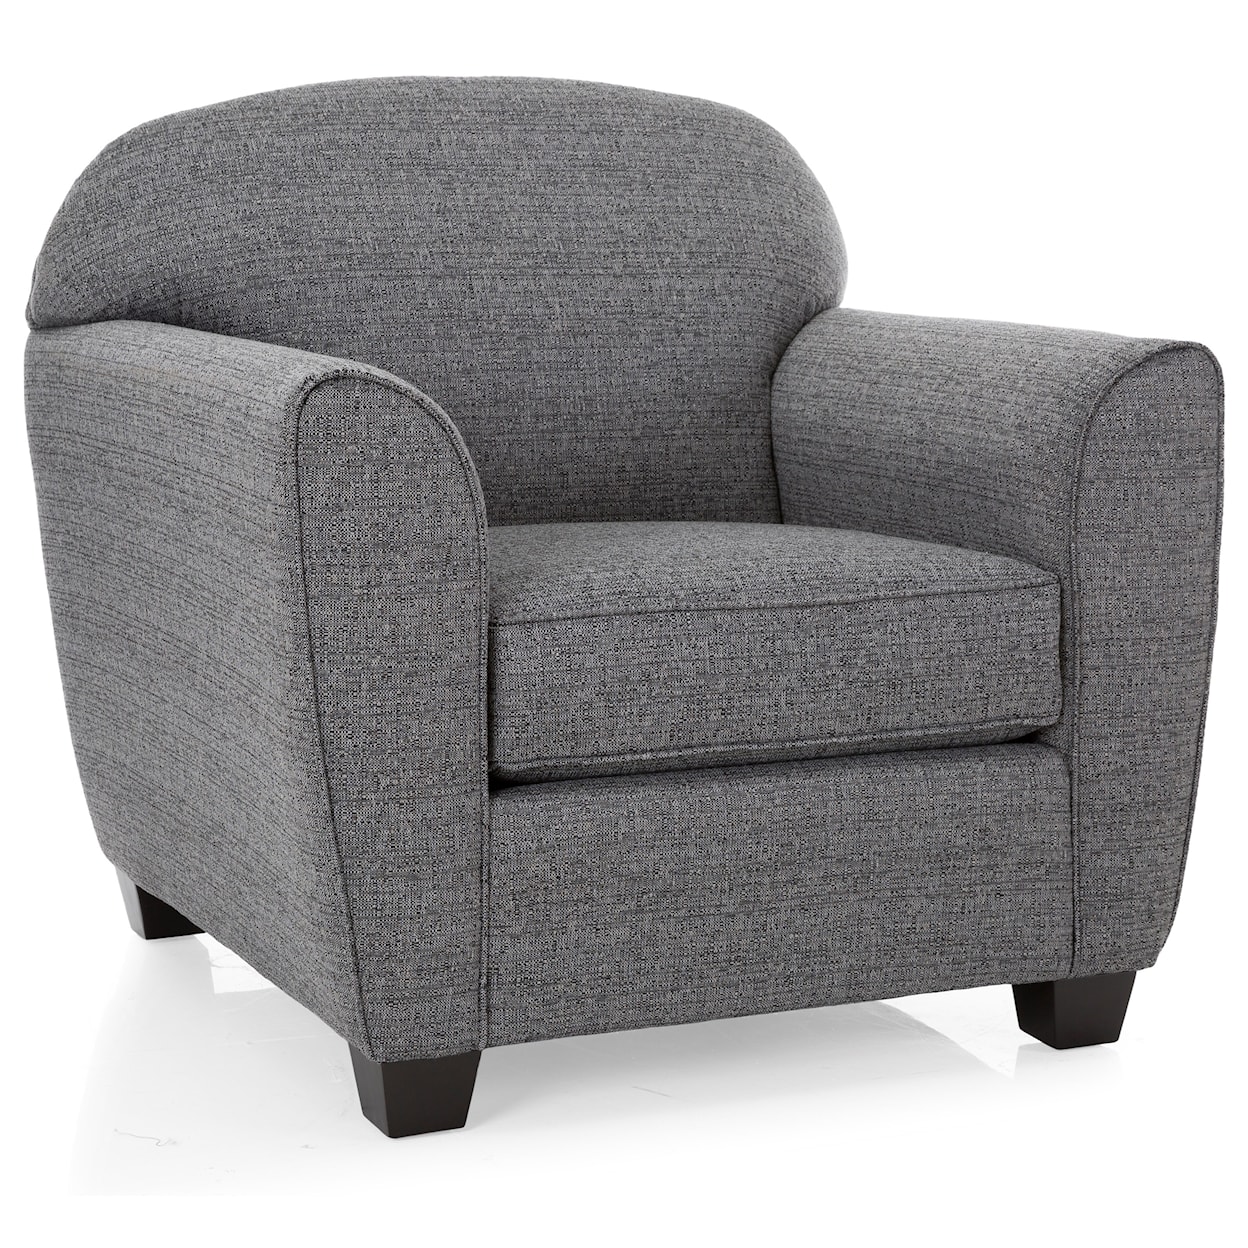 Decor-Rest 2317 Upholstered Chair